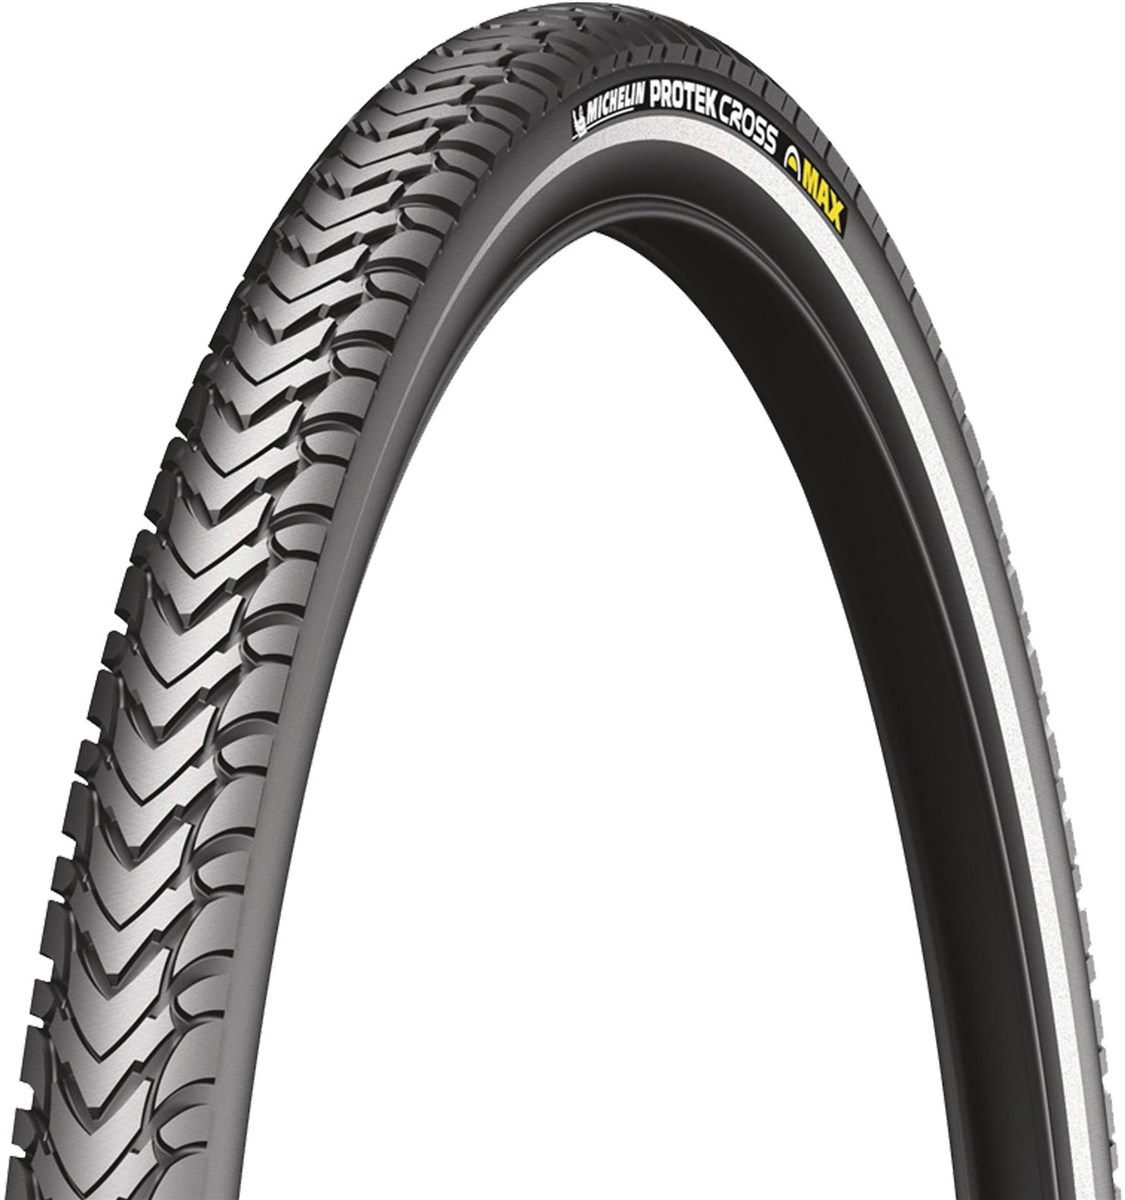 Michelin Protek Cross Max 700c Gravel Tyre product image